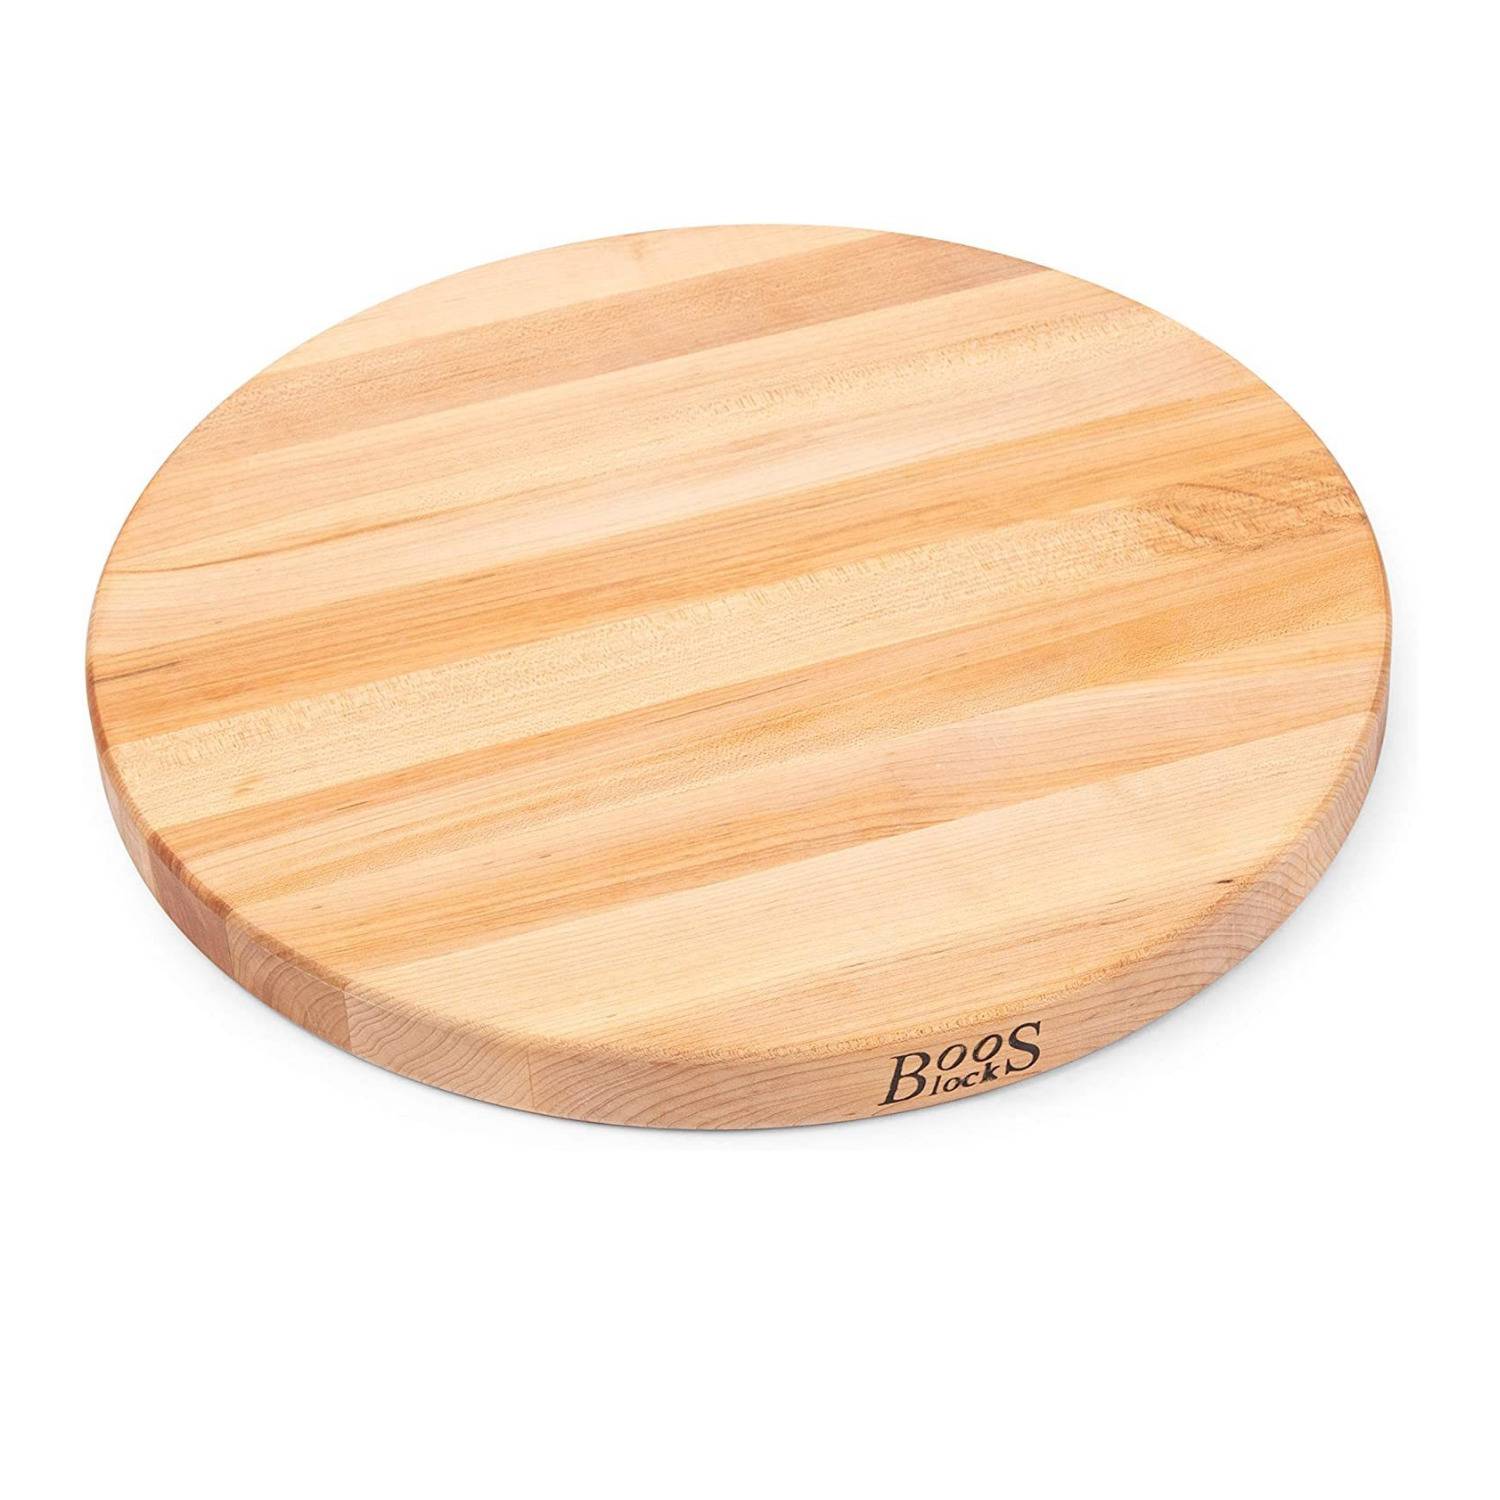 John Boos Block R18 Maple Wood Edge Grain Reversible Round Cutting Board (18 x 1.5 Inches)